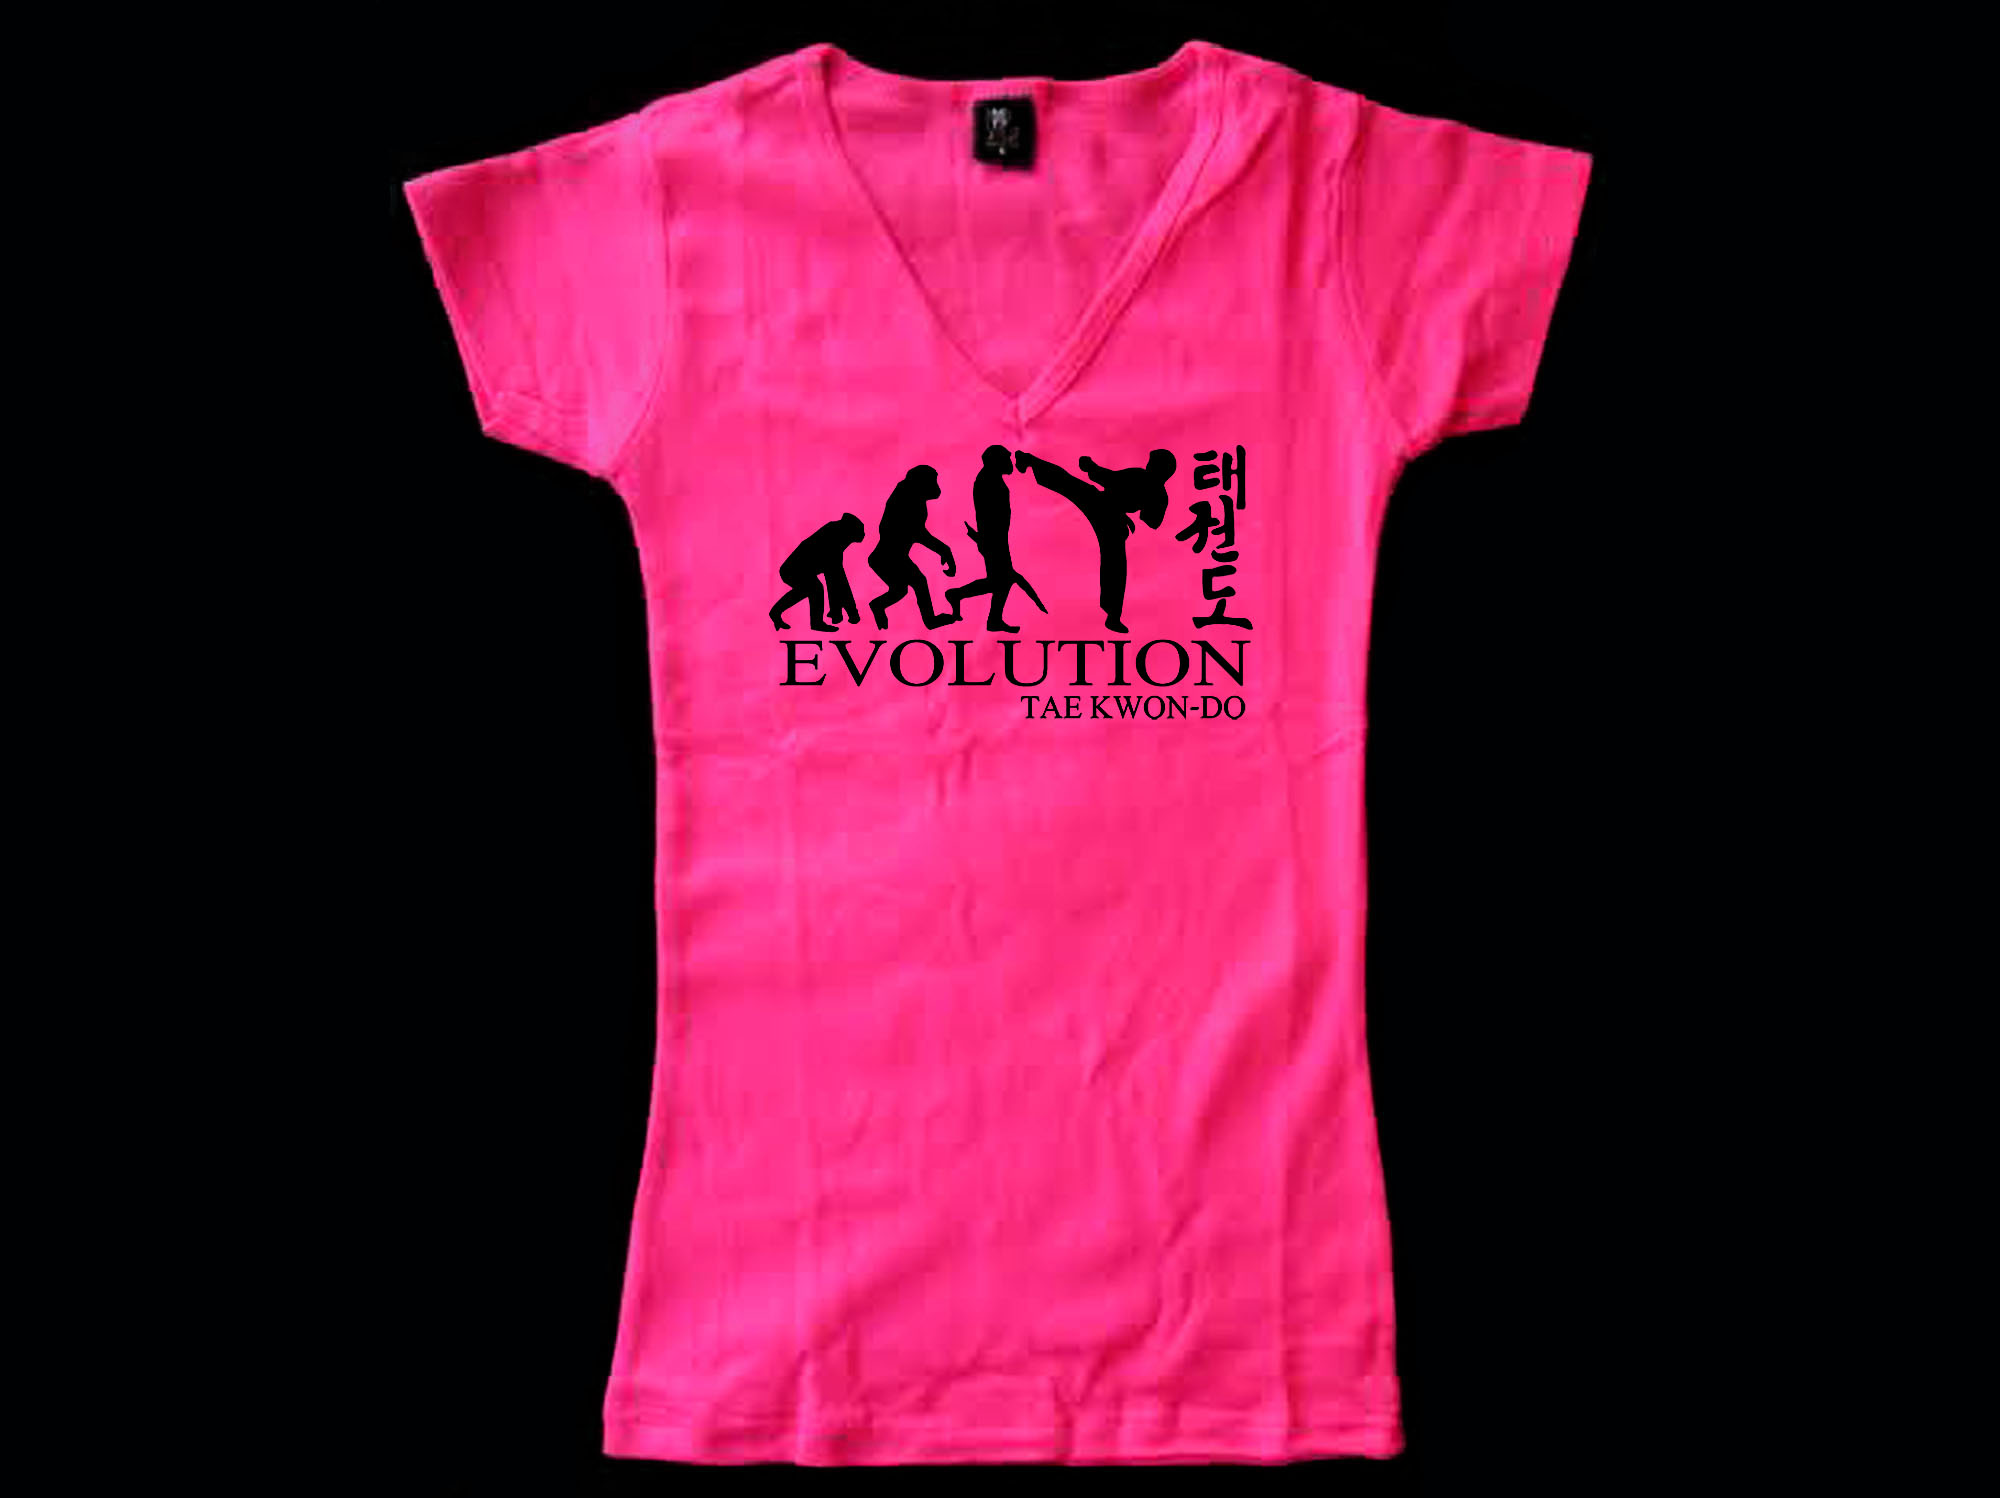 Taekwondo Evolution Tae kwon do MMA martial arts pink t-shirt